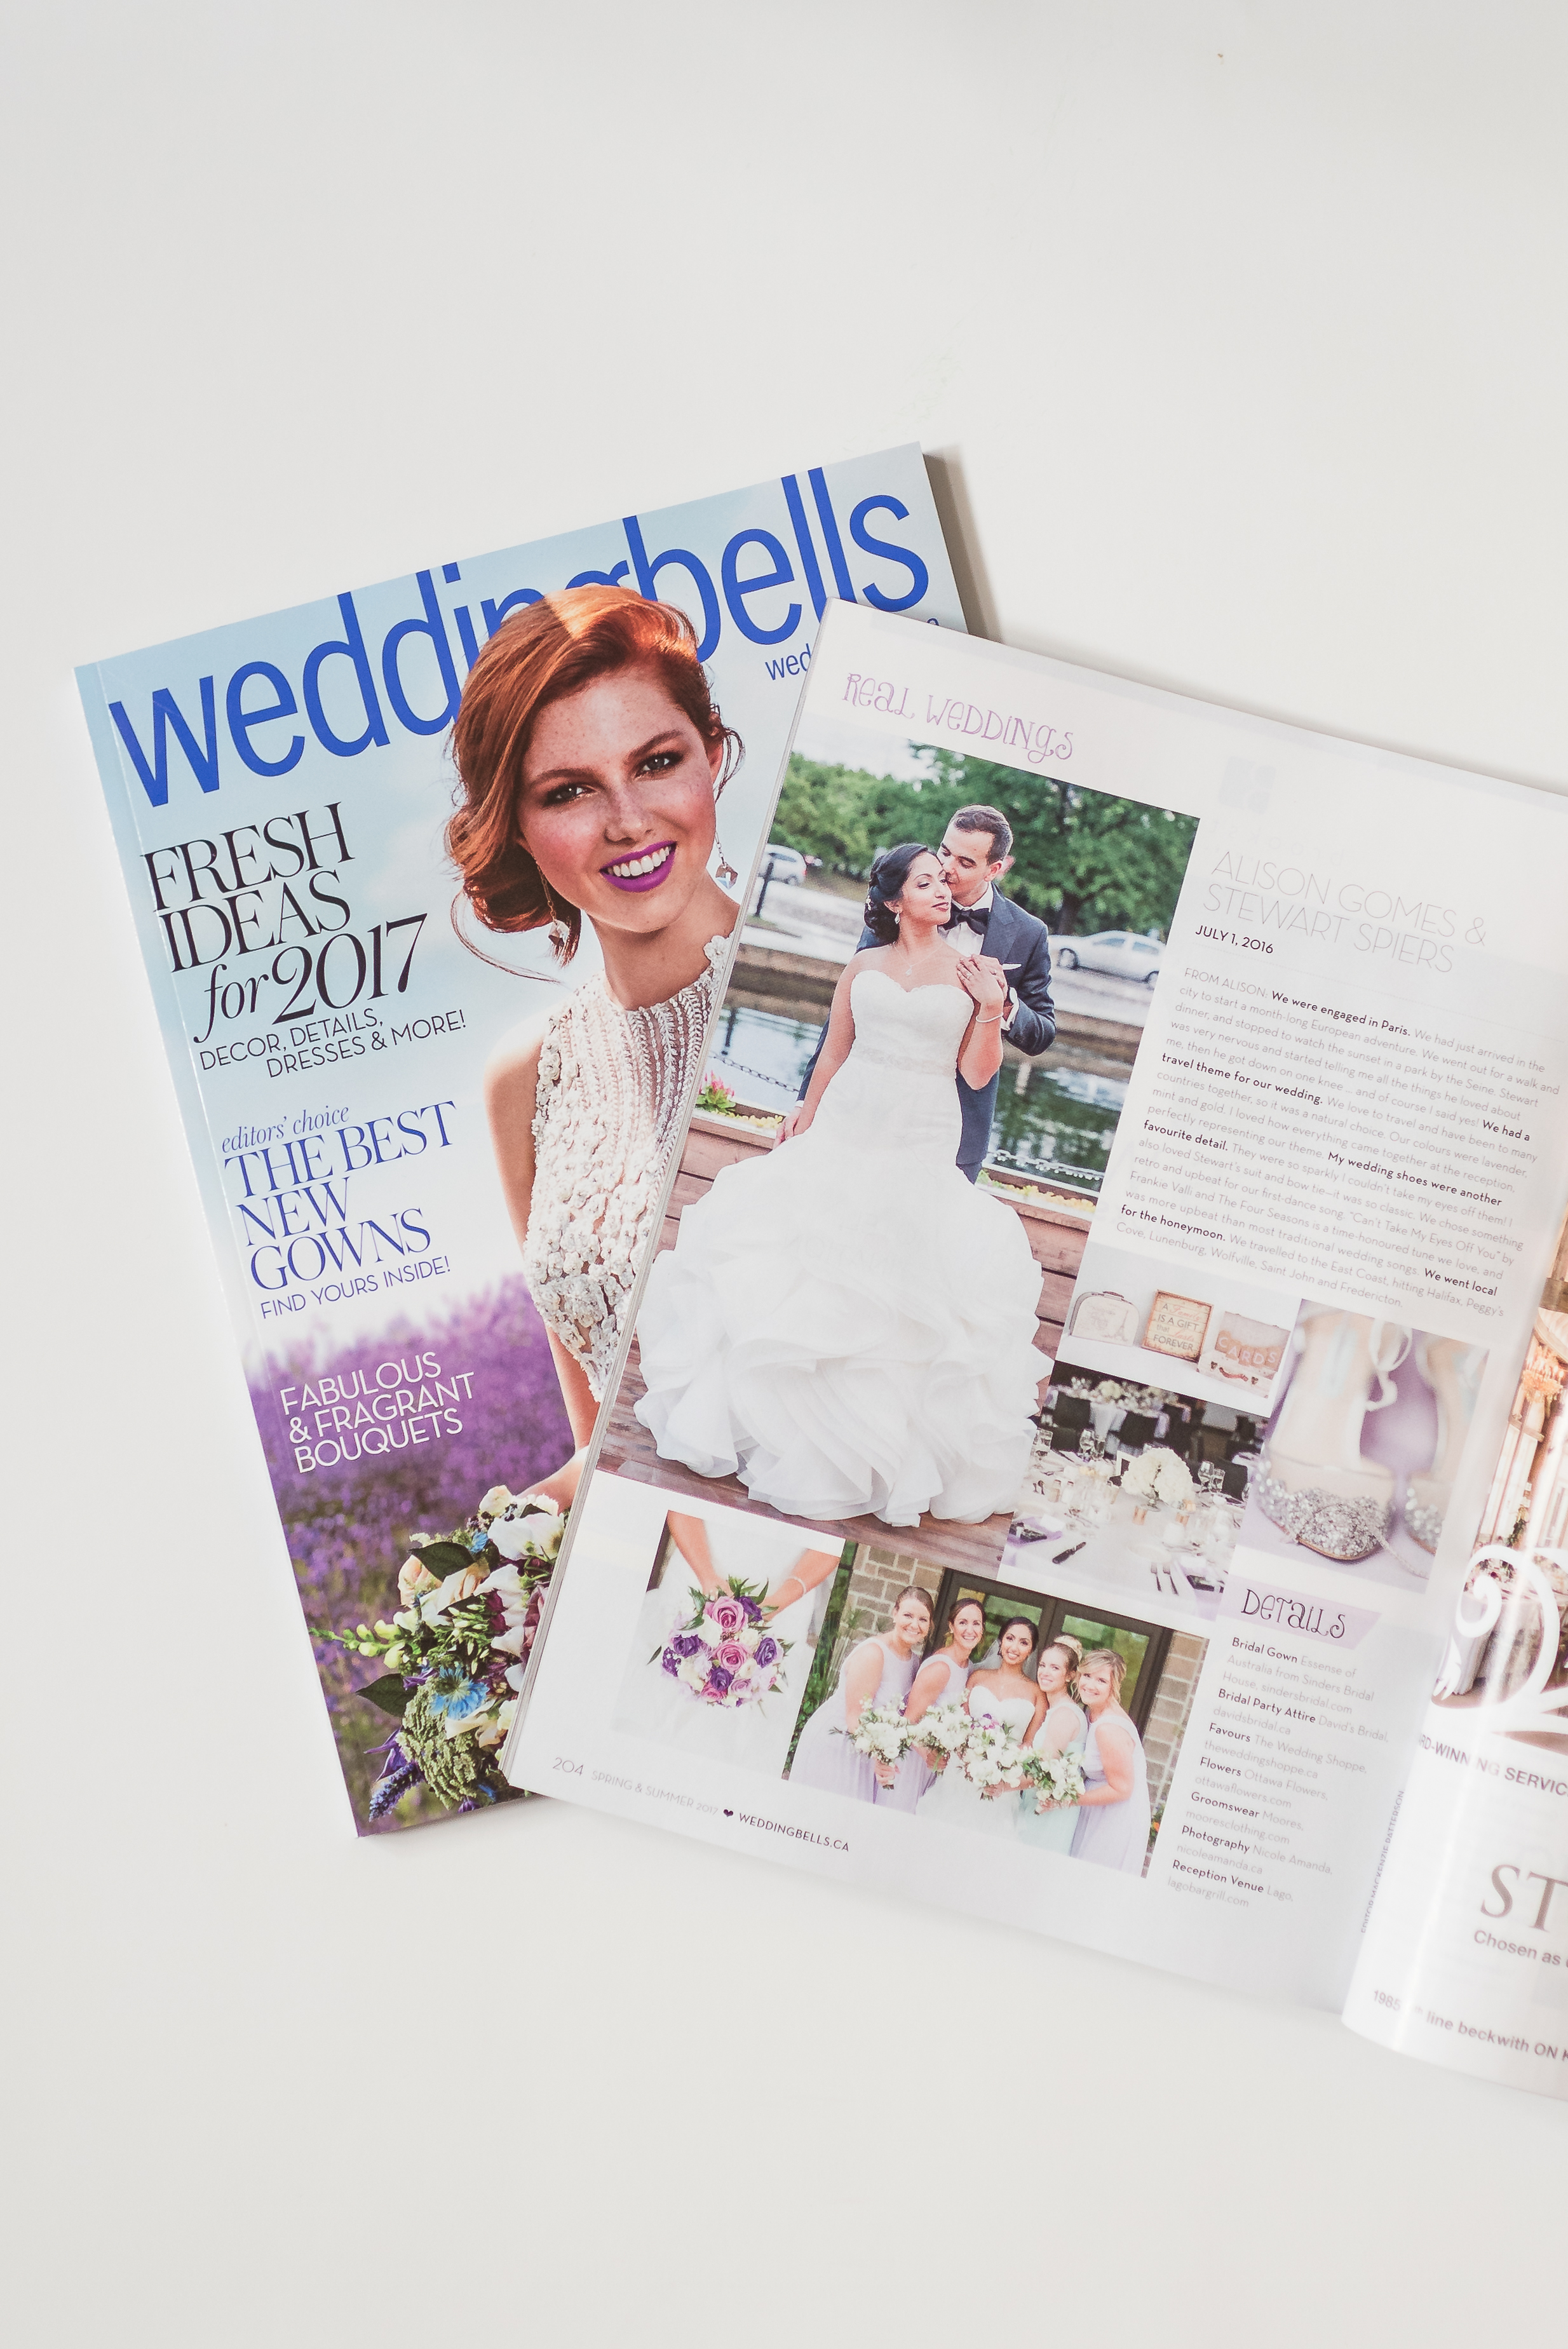 Weddingbells magazine